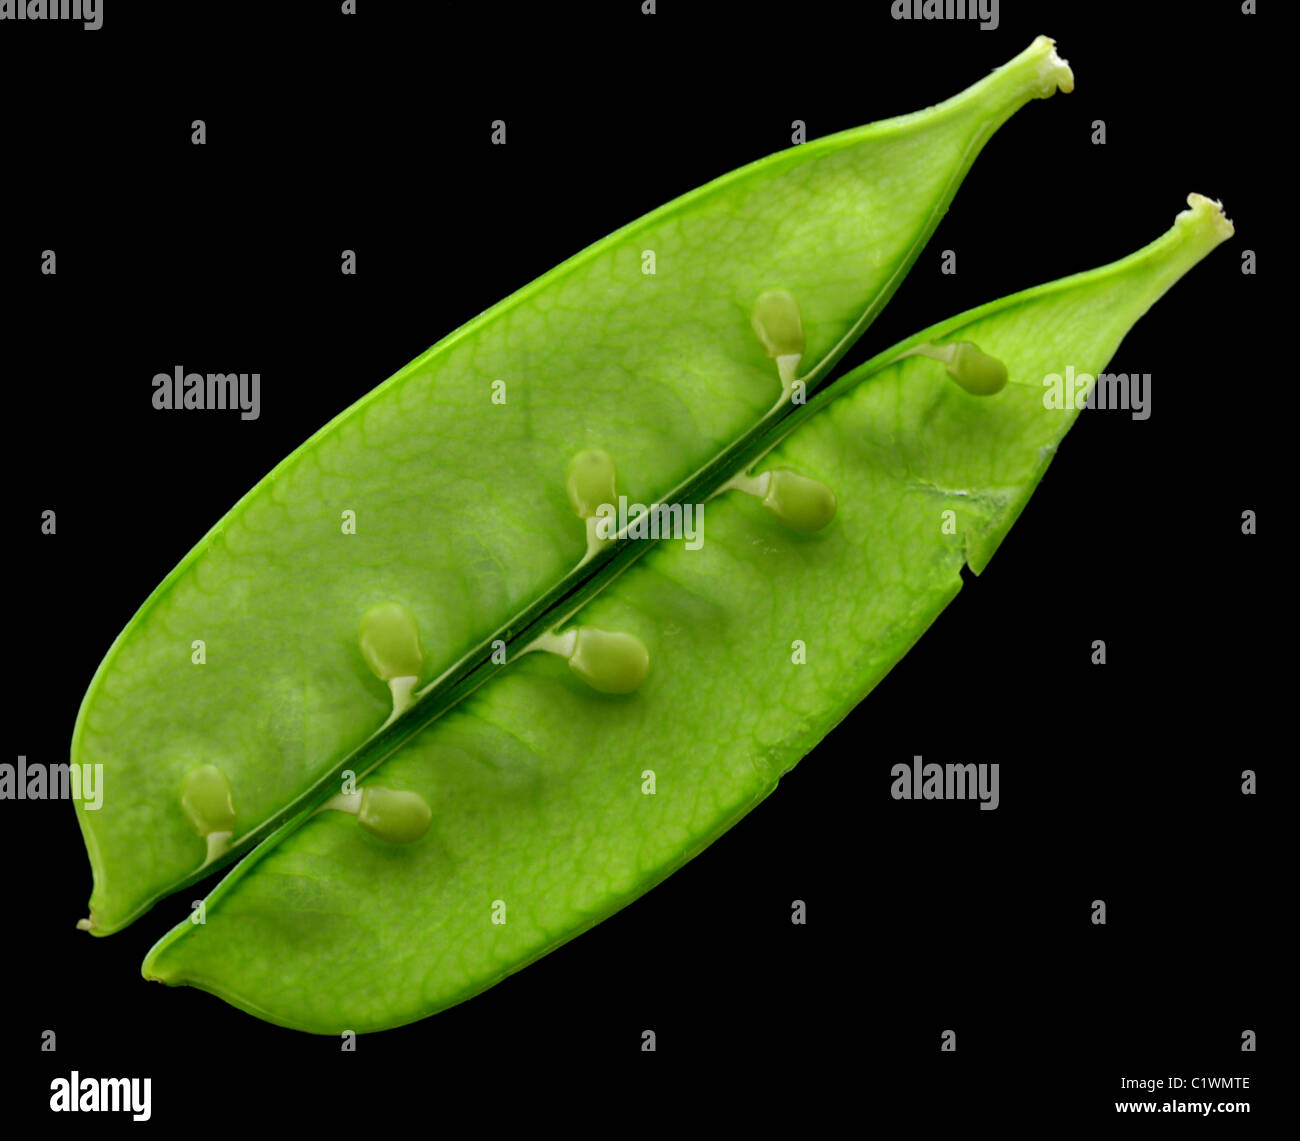 A snow pea split open, revealing the seeds. Stock Photo